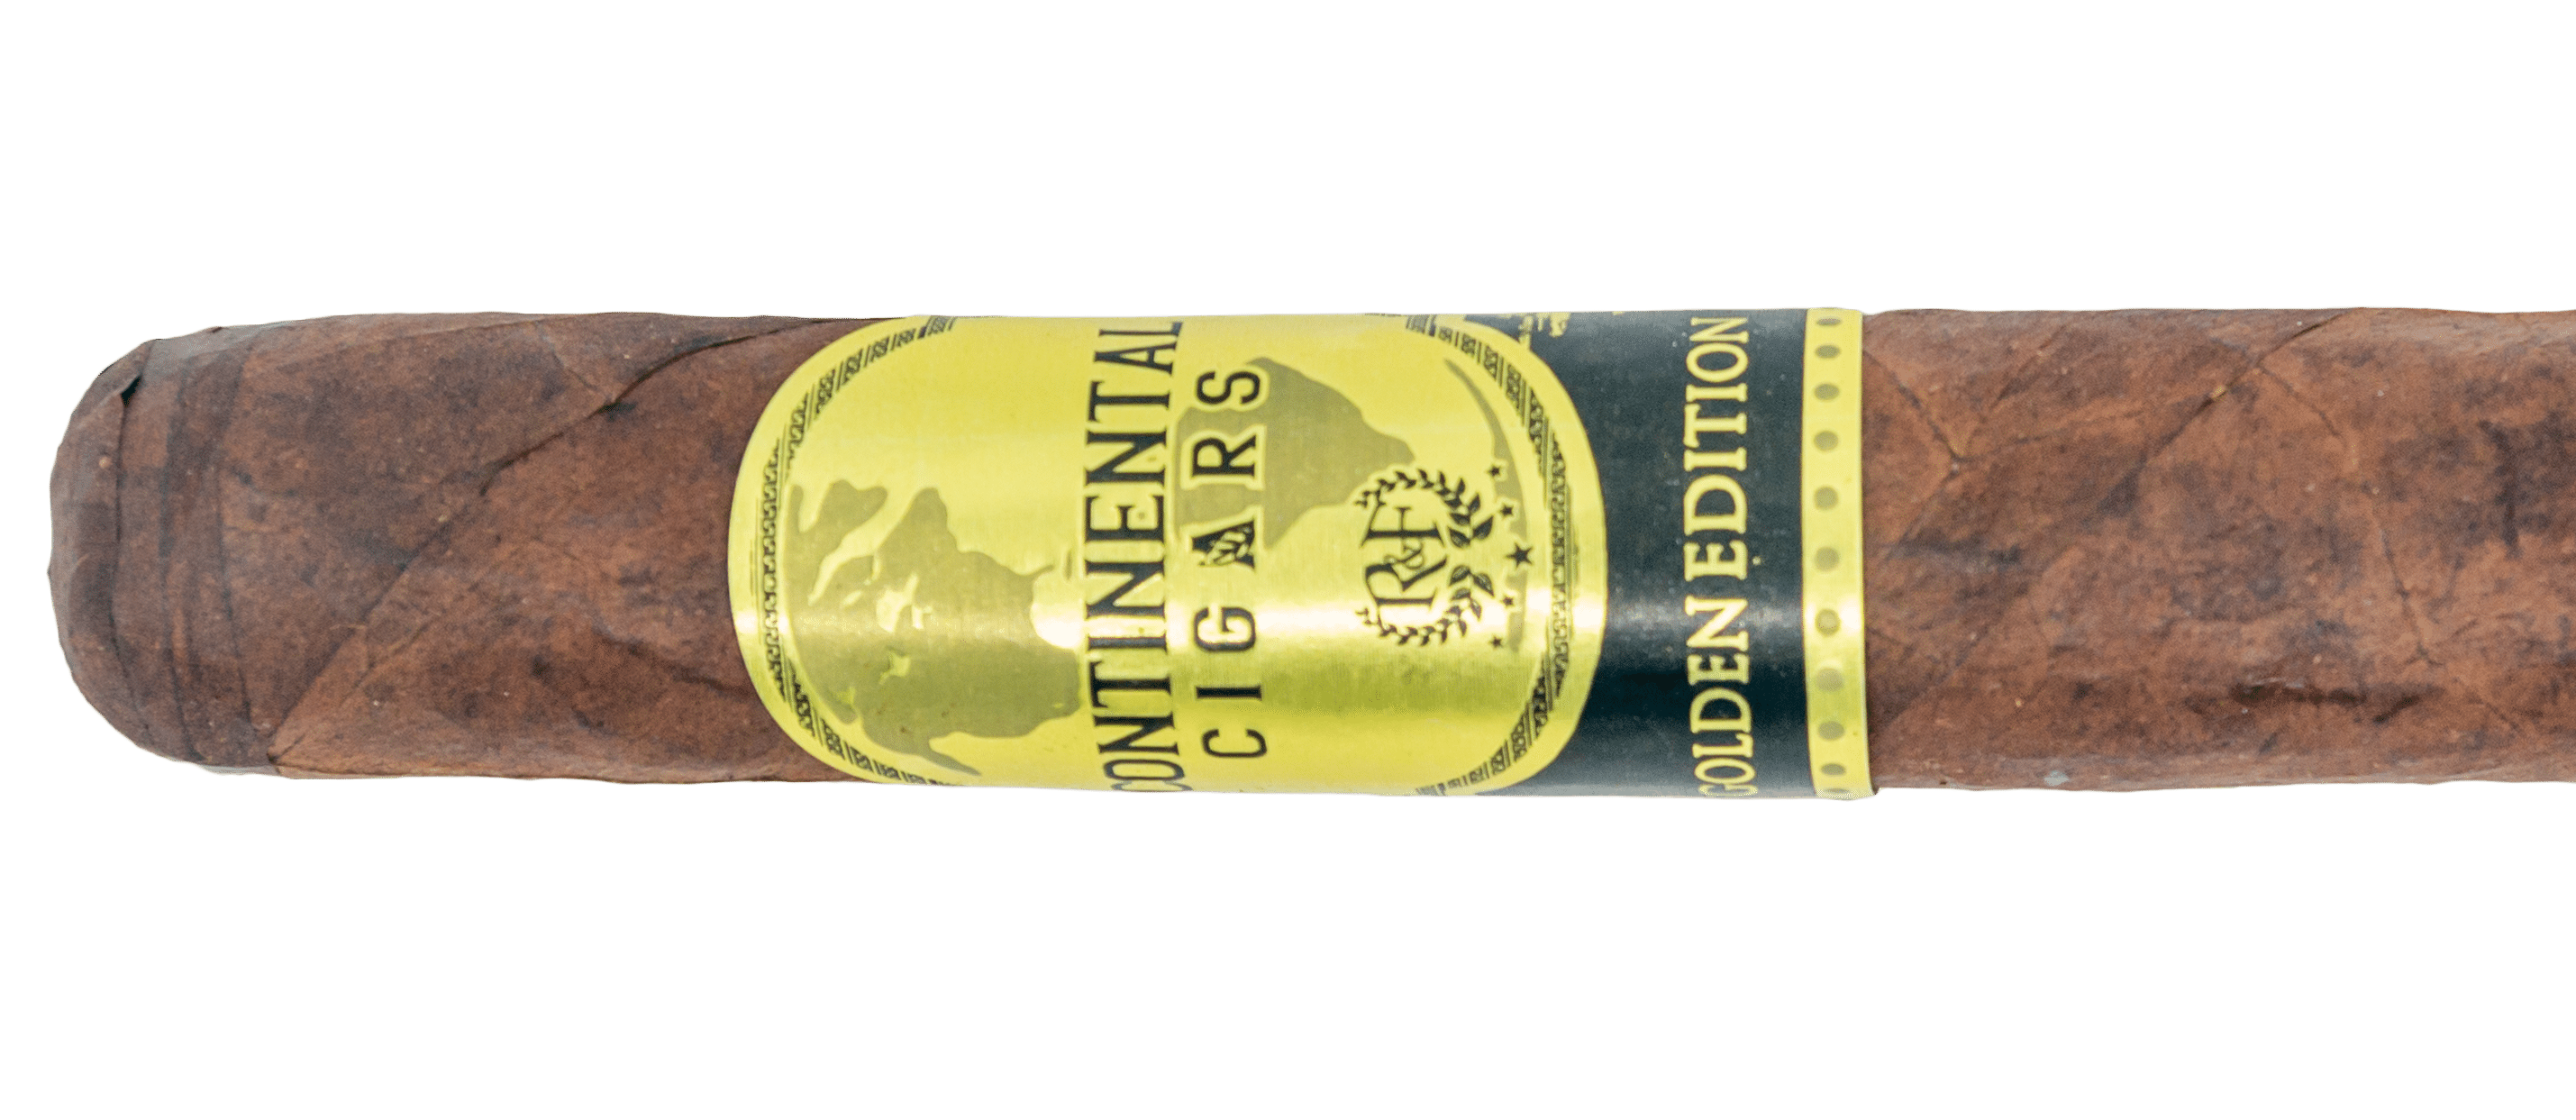 Continental Premium Golden Edition - Blind Cigar Review